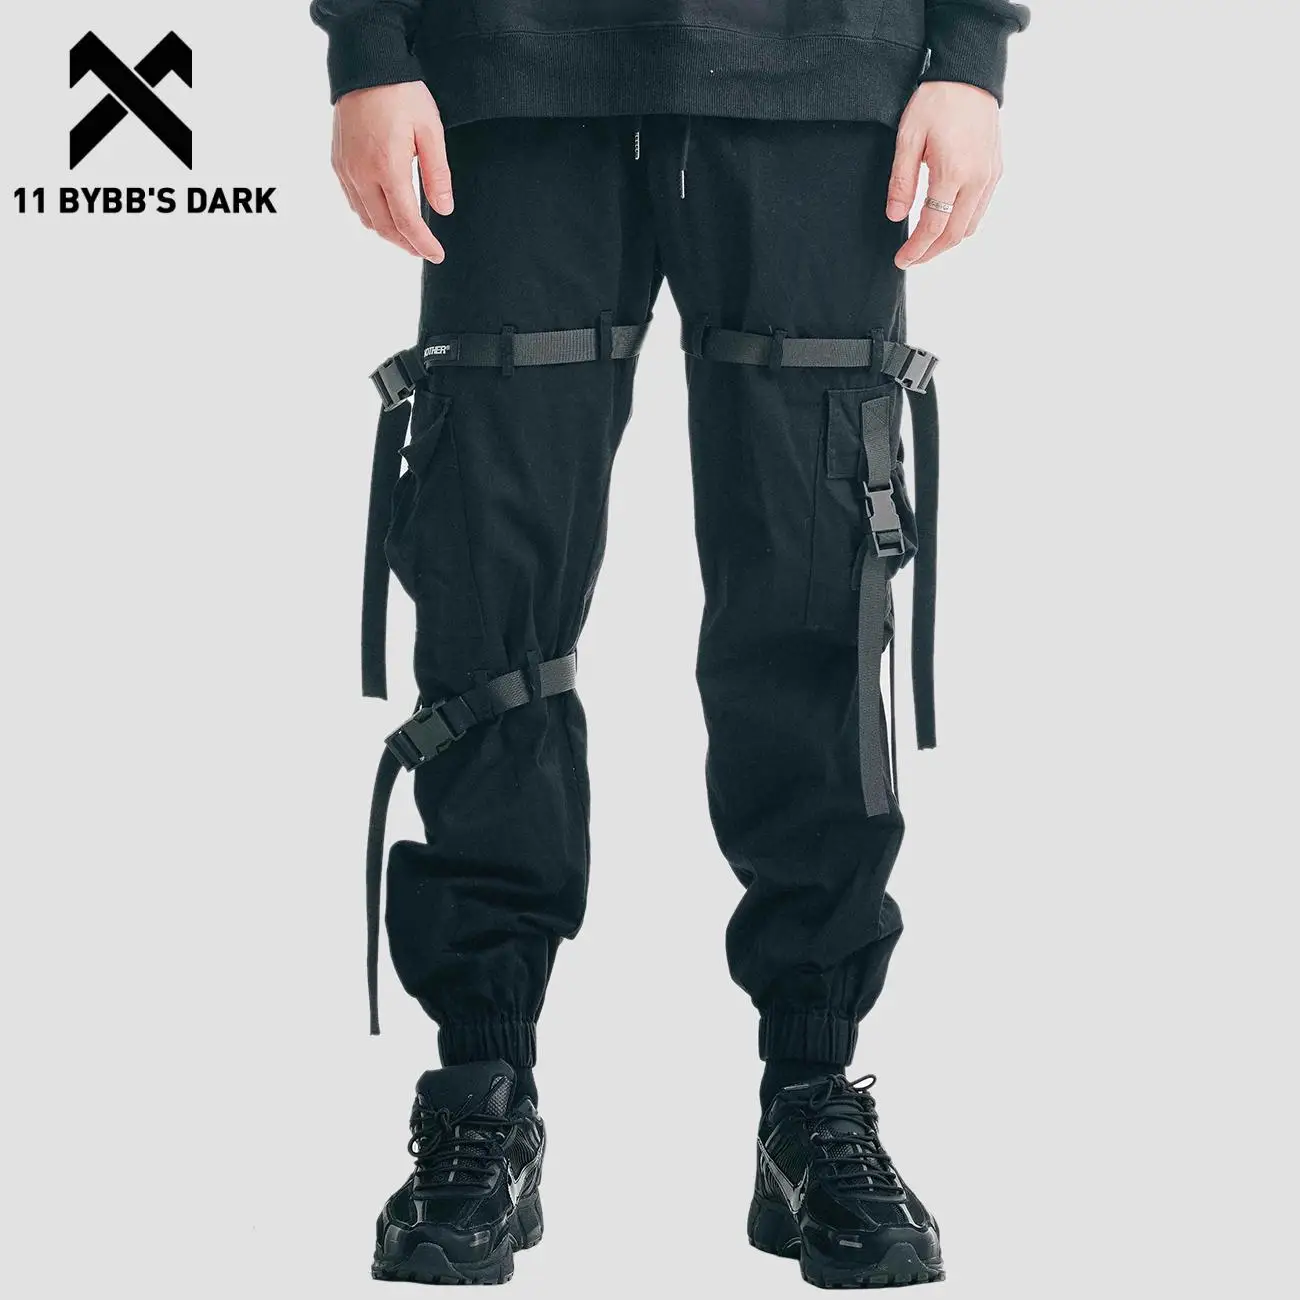 11 BYBB'S DARK Men Tactical Functional Joggers Pants Buckle Ribbons Cargo Pants Hip Hop Loose Casual Pants Trousers Black